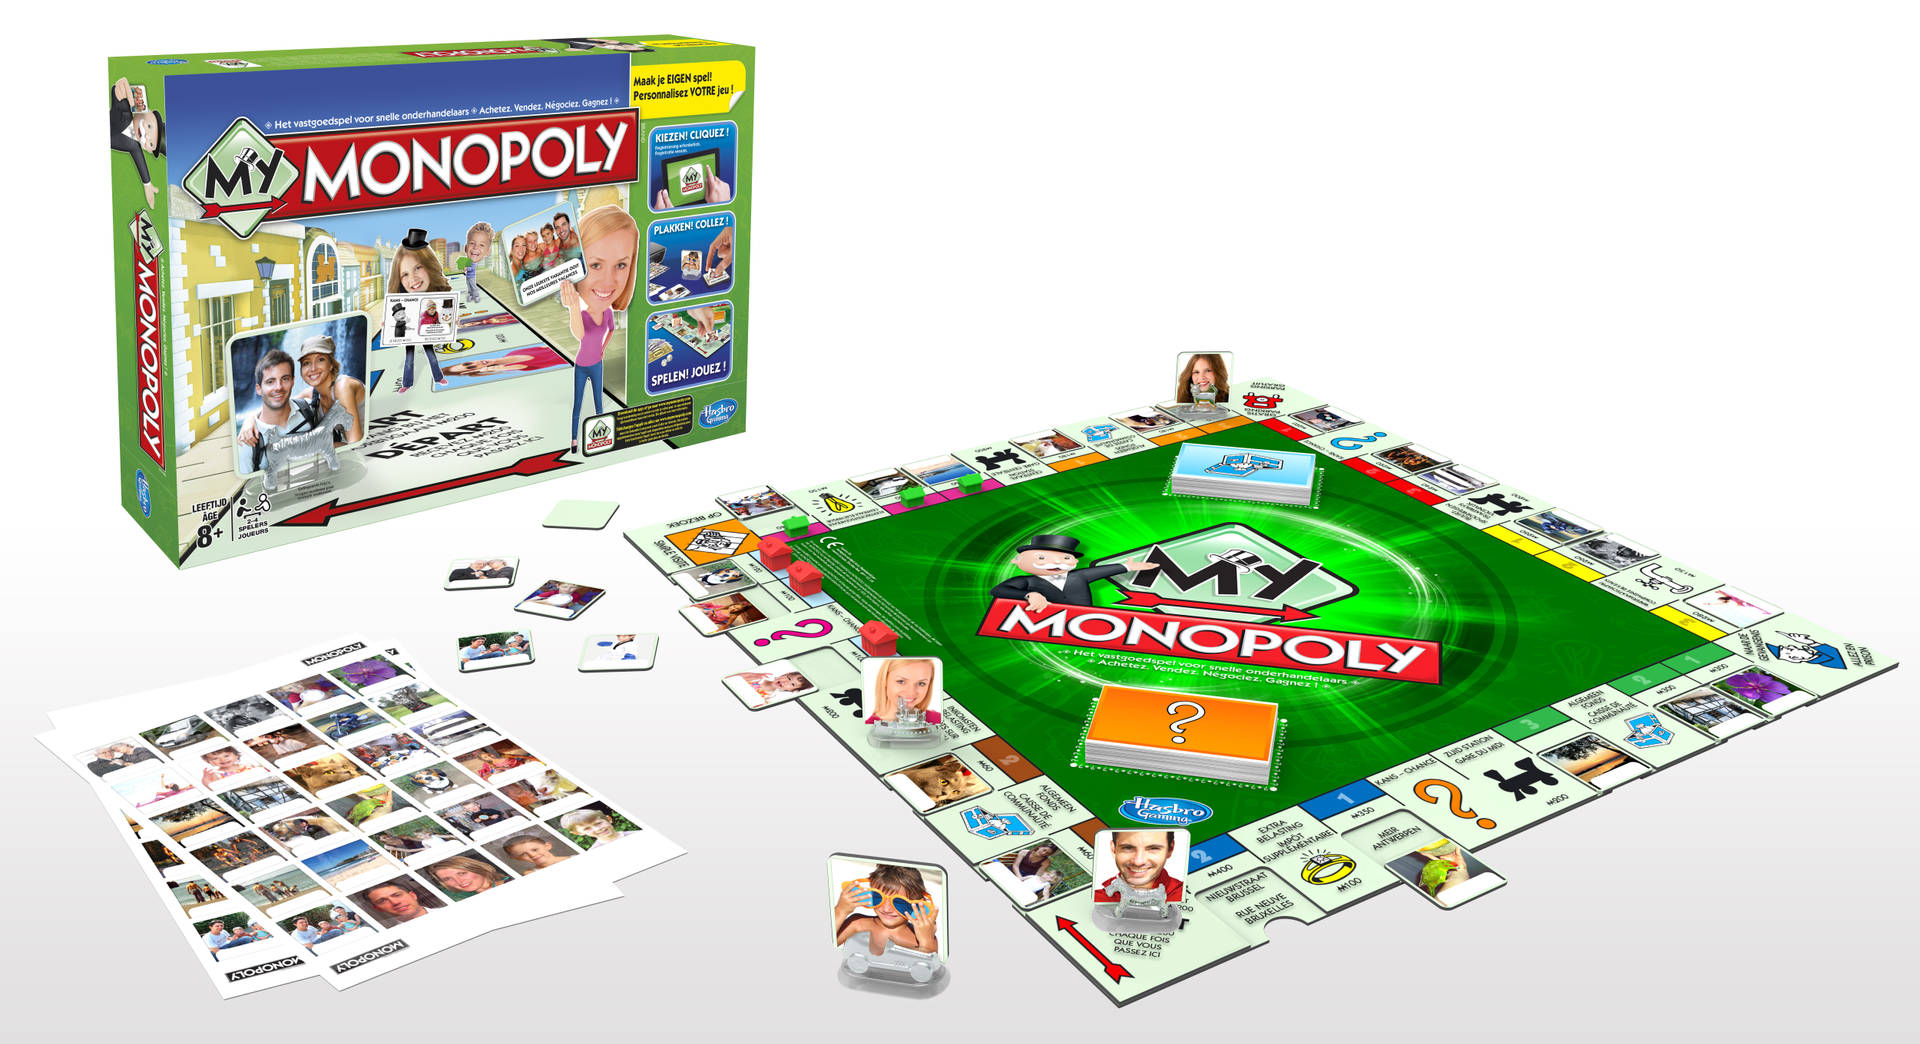 Monopoly Promotional Image Background